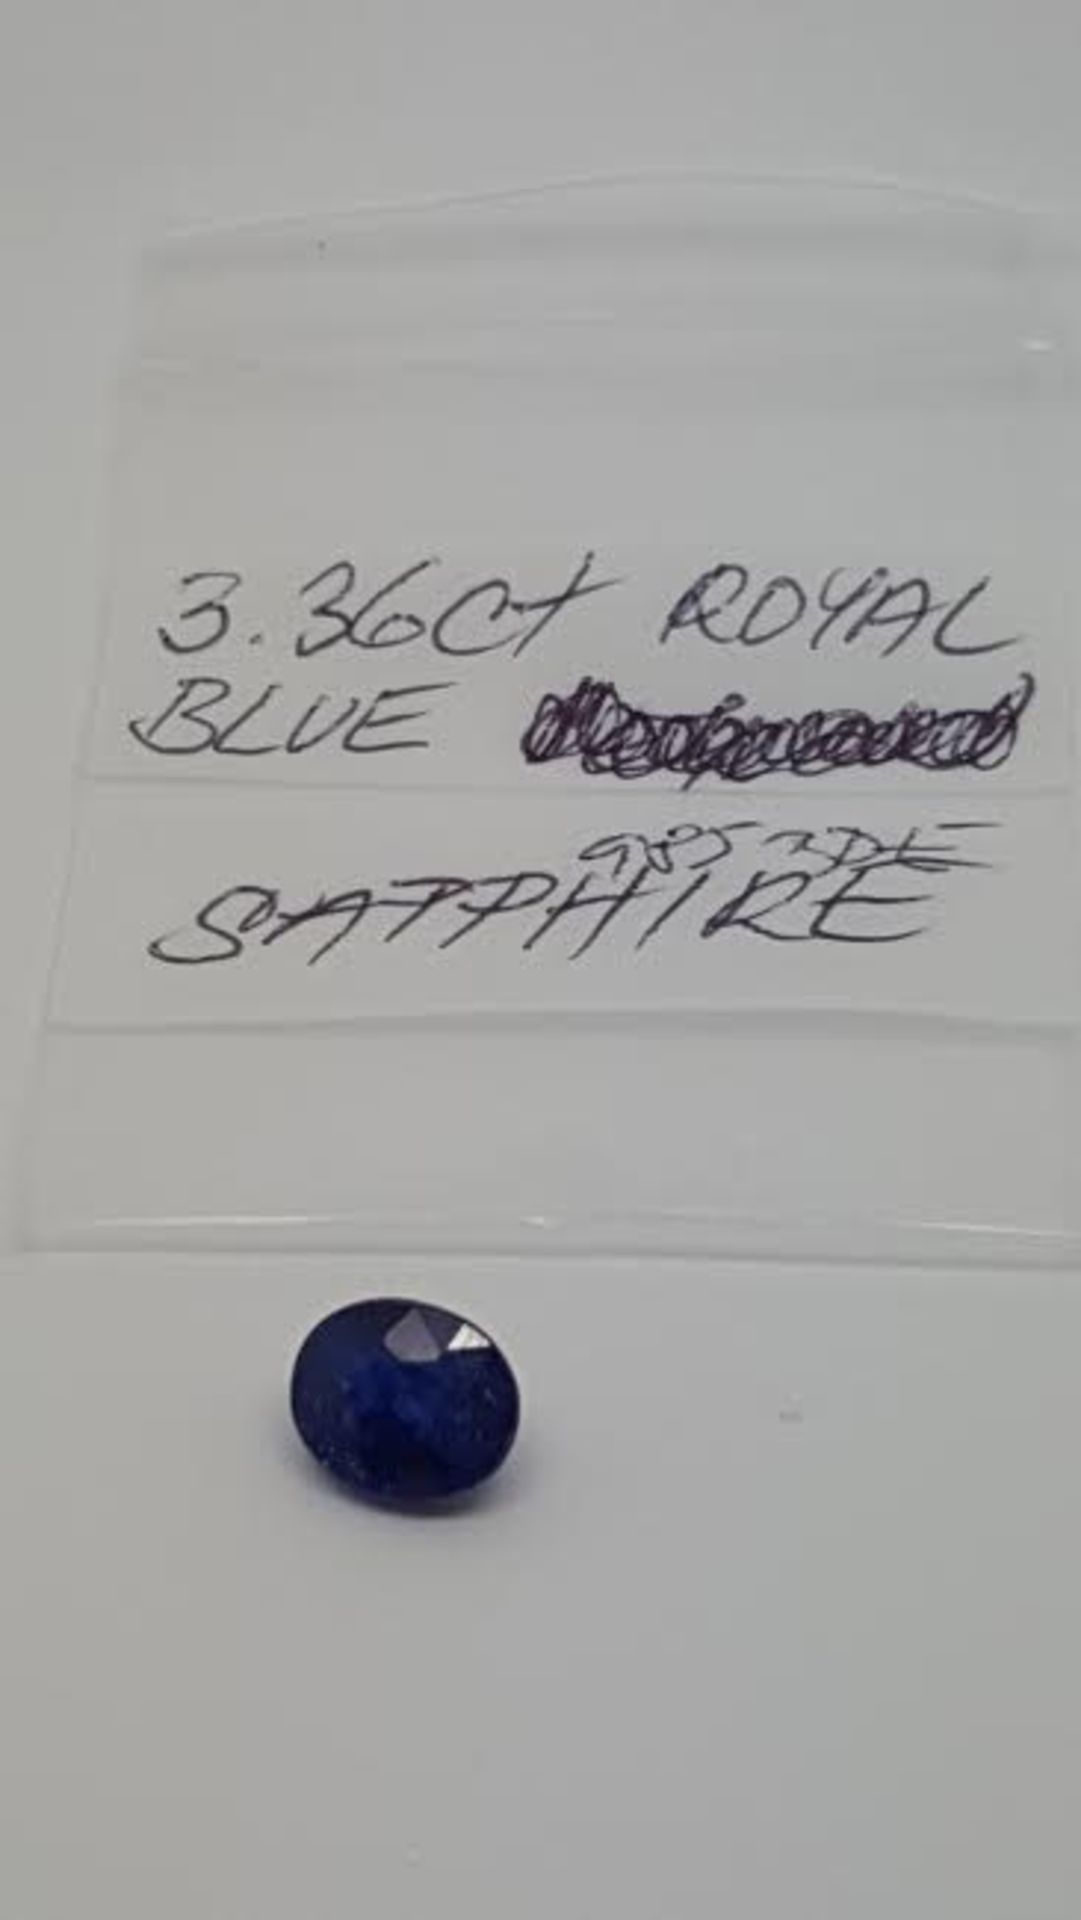 3.36 ct royal blue sapphire